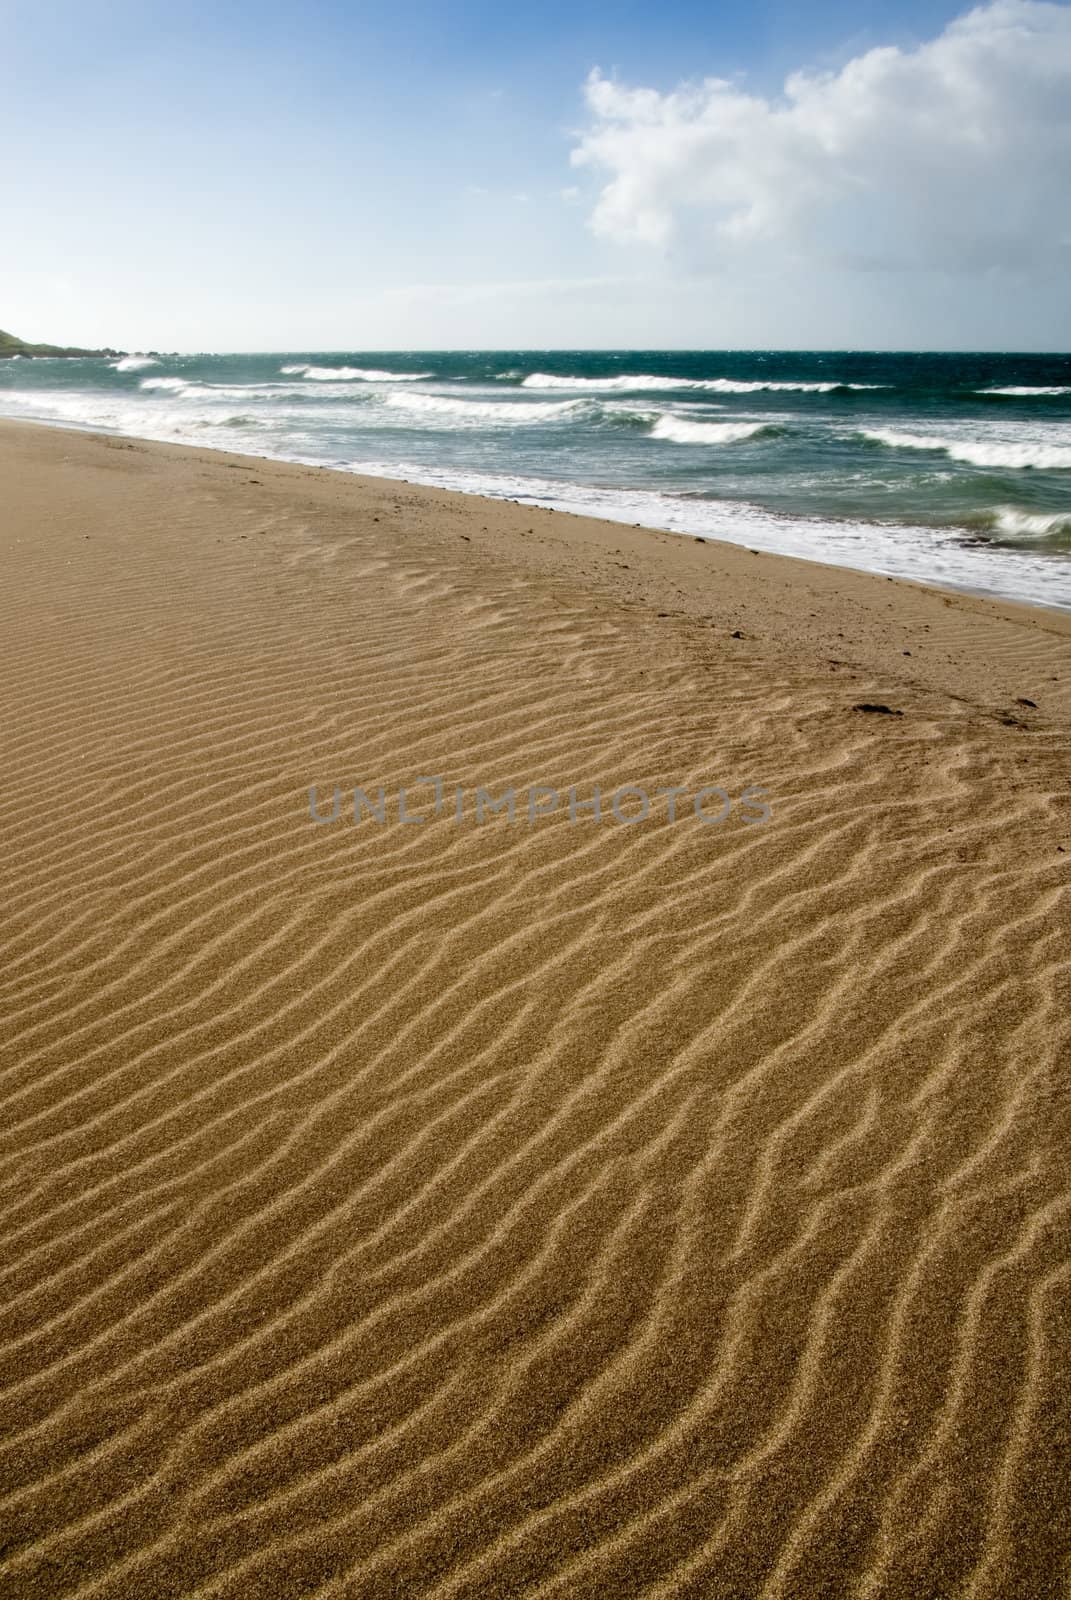 It is a beautiful beach sand shap in Taiwan.